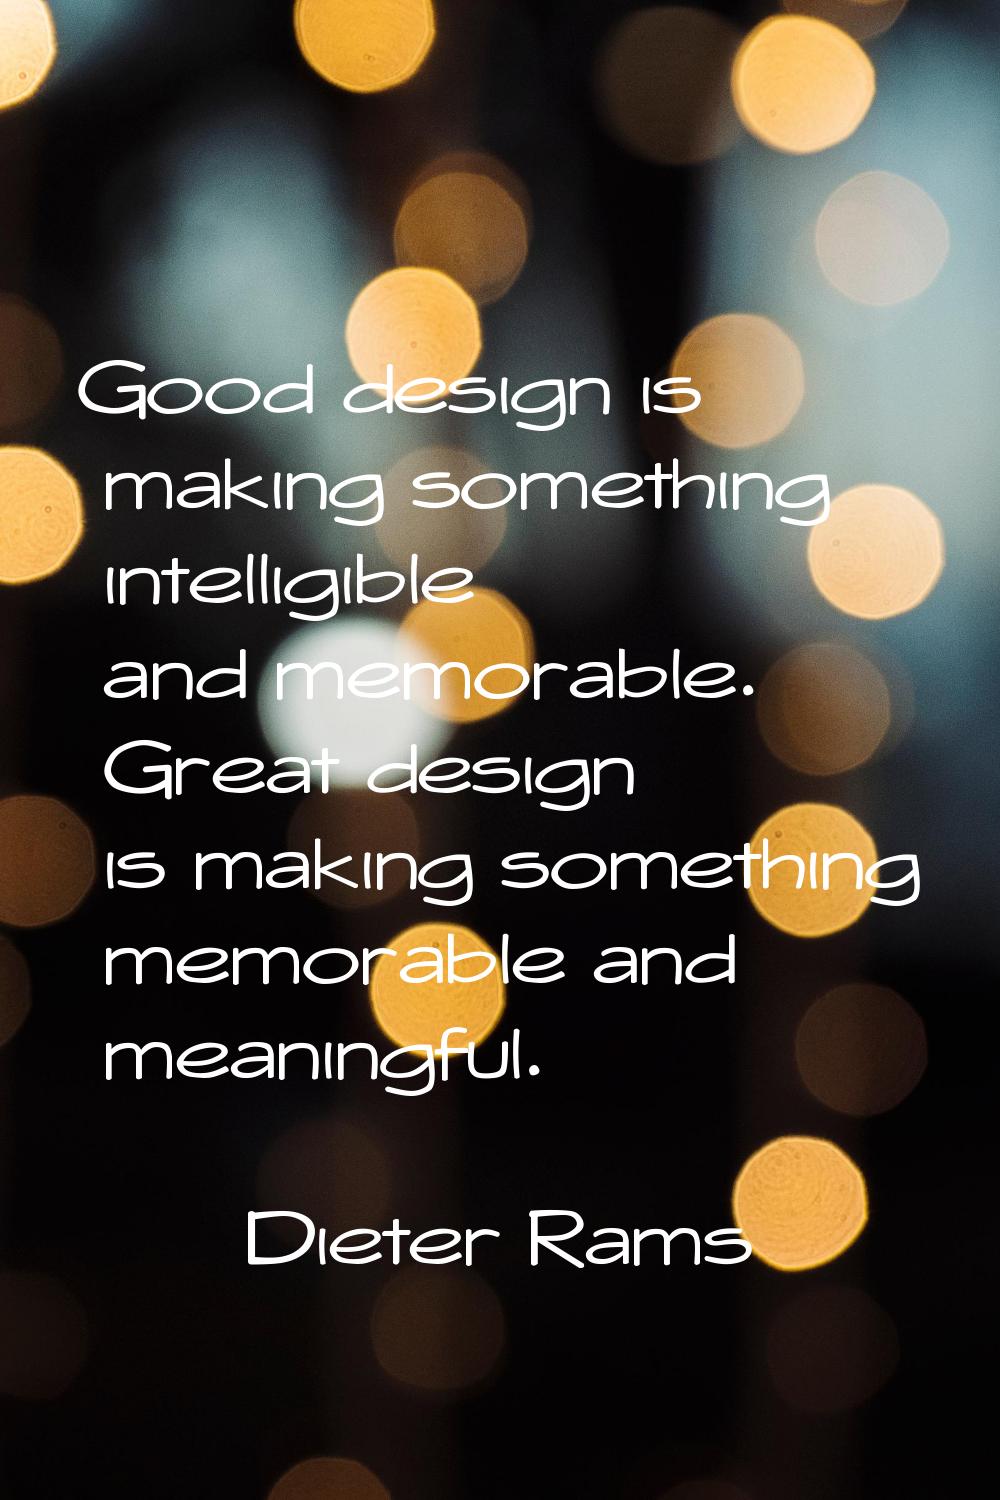 Good design is making something intelligible and memorable. Great design is making something memora